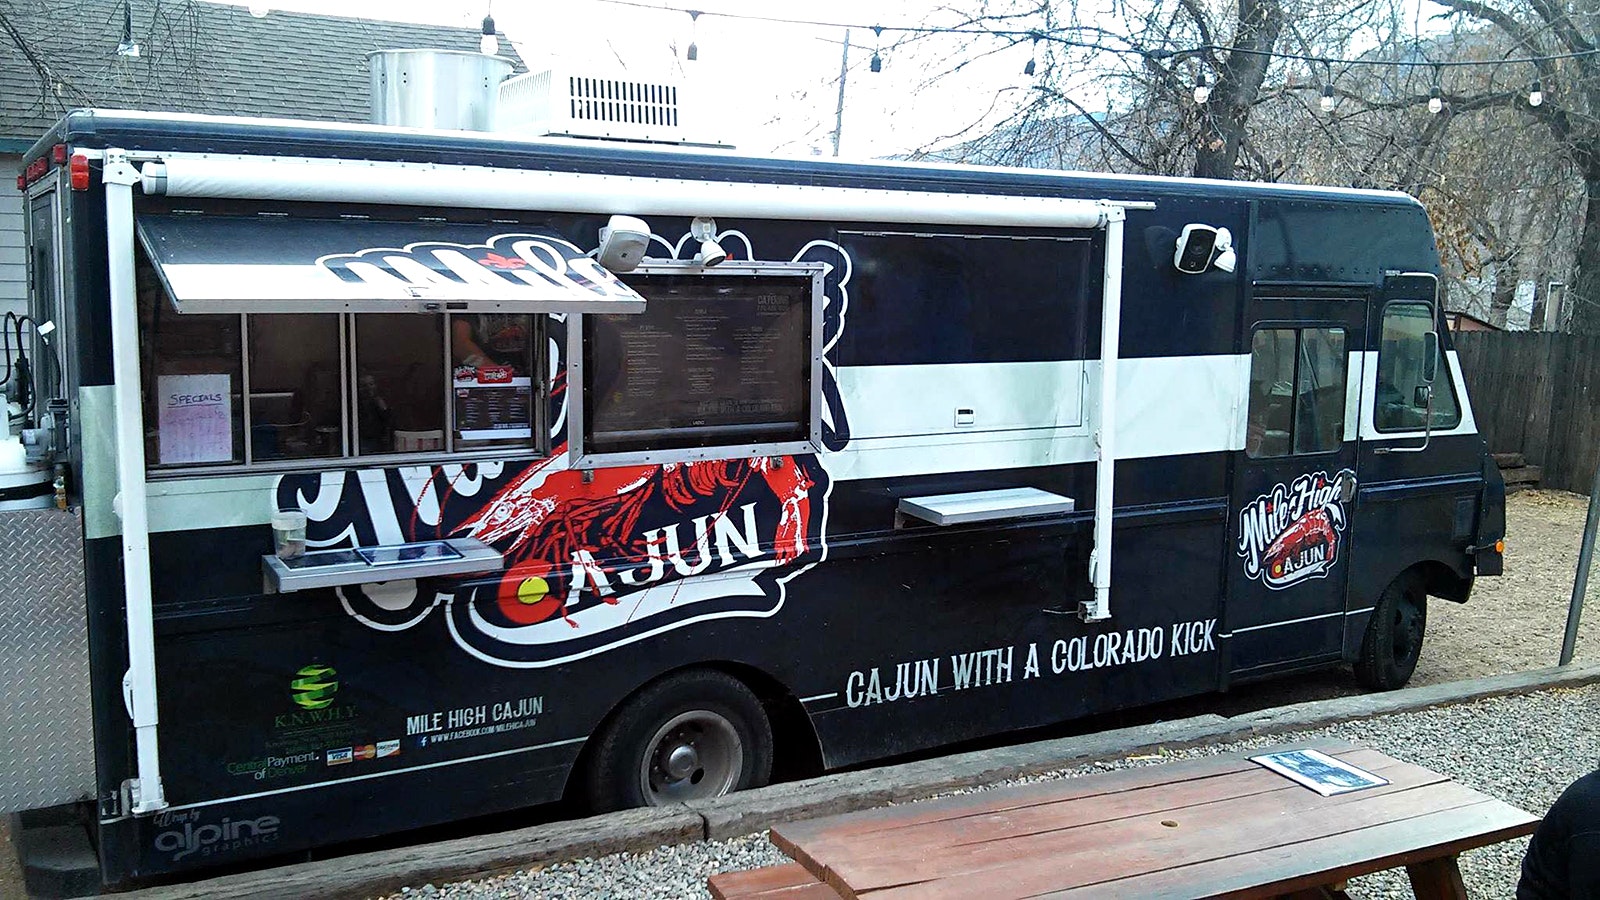 Mile Hi Cajun food truck located on Highway 89 in Alpine, Wyoming.